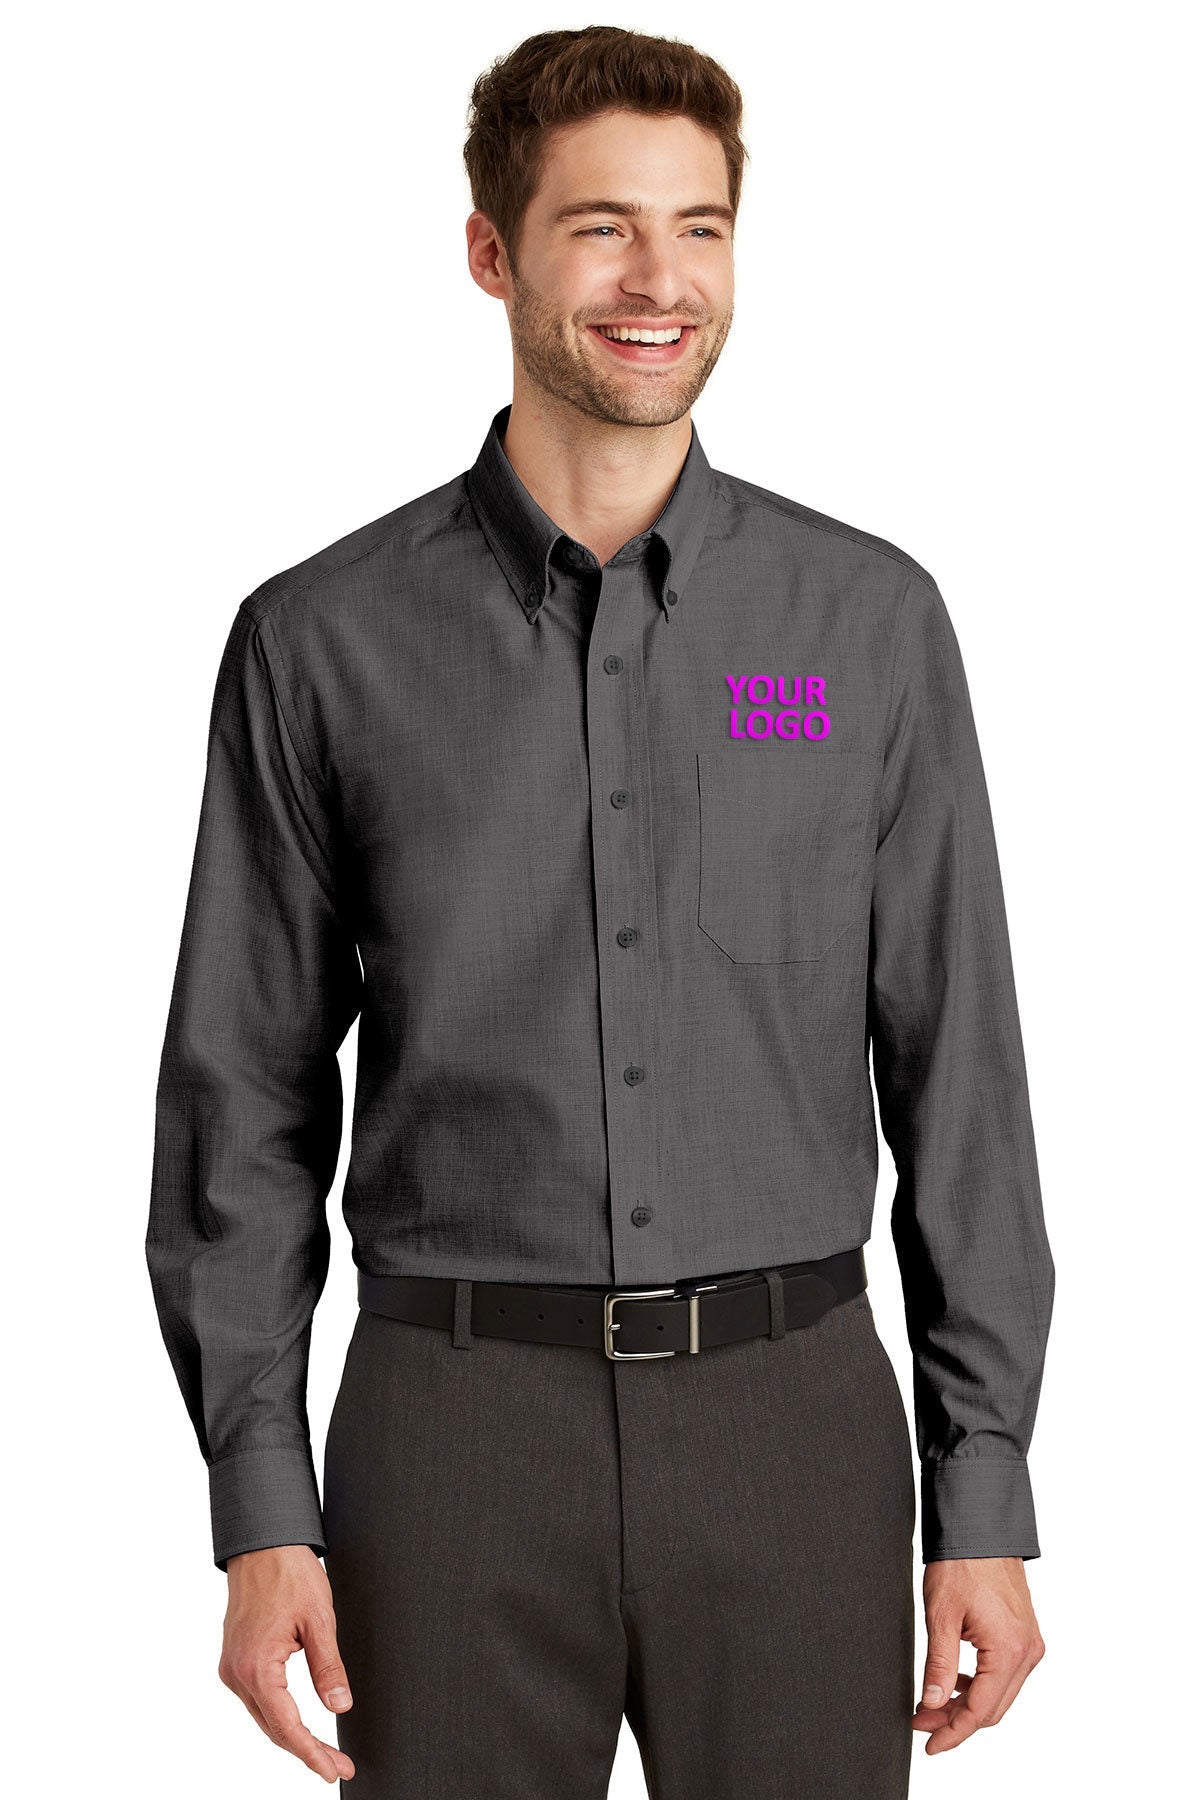 Port Authority Soft Black TLS640 business shirts with company logo